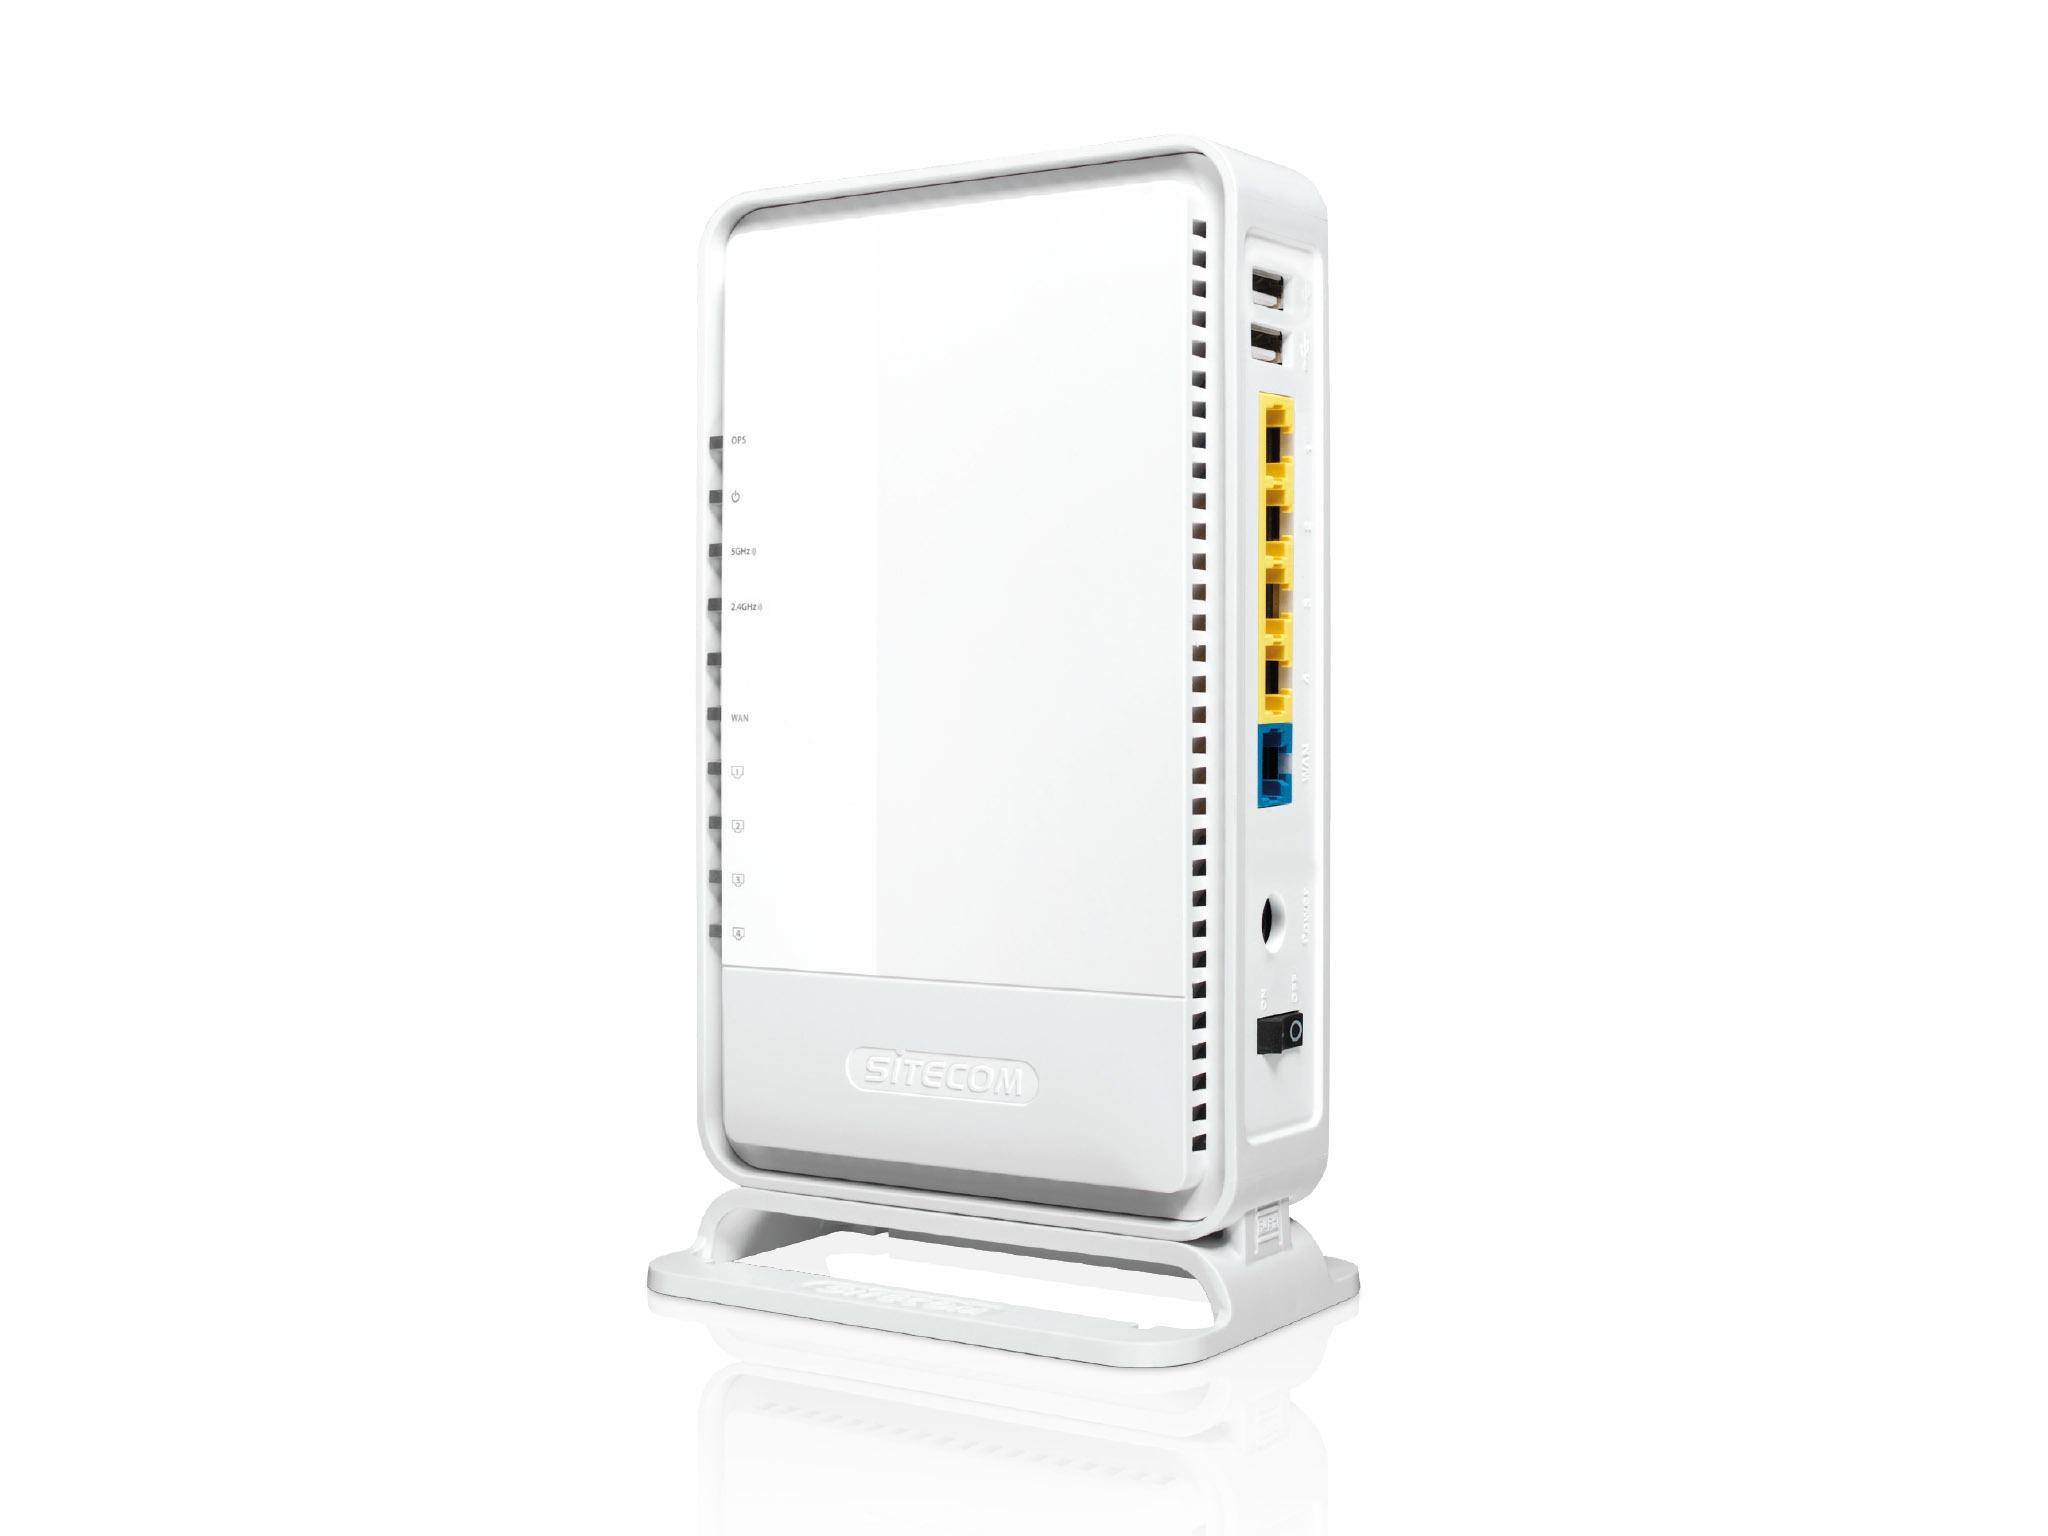 Image of AC1750 Wi-Fi Gigabit Router X8